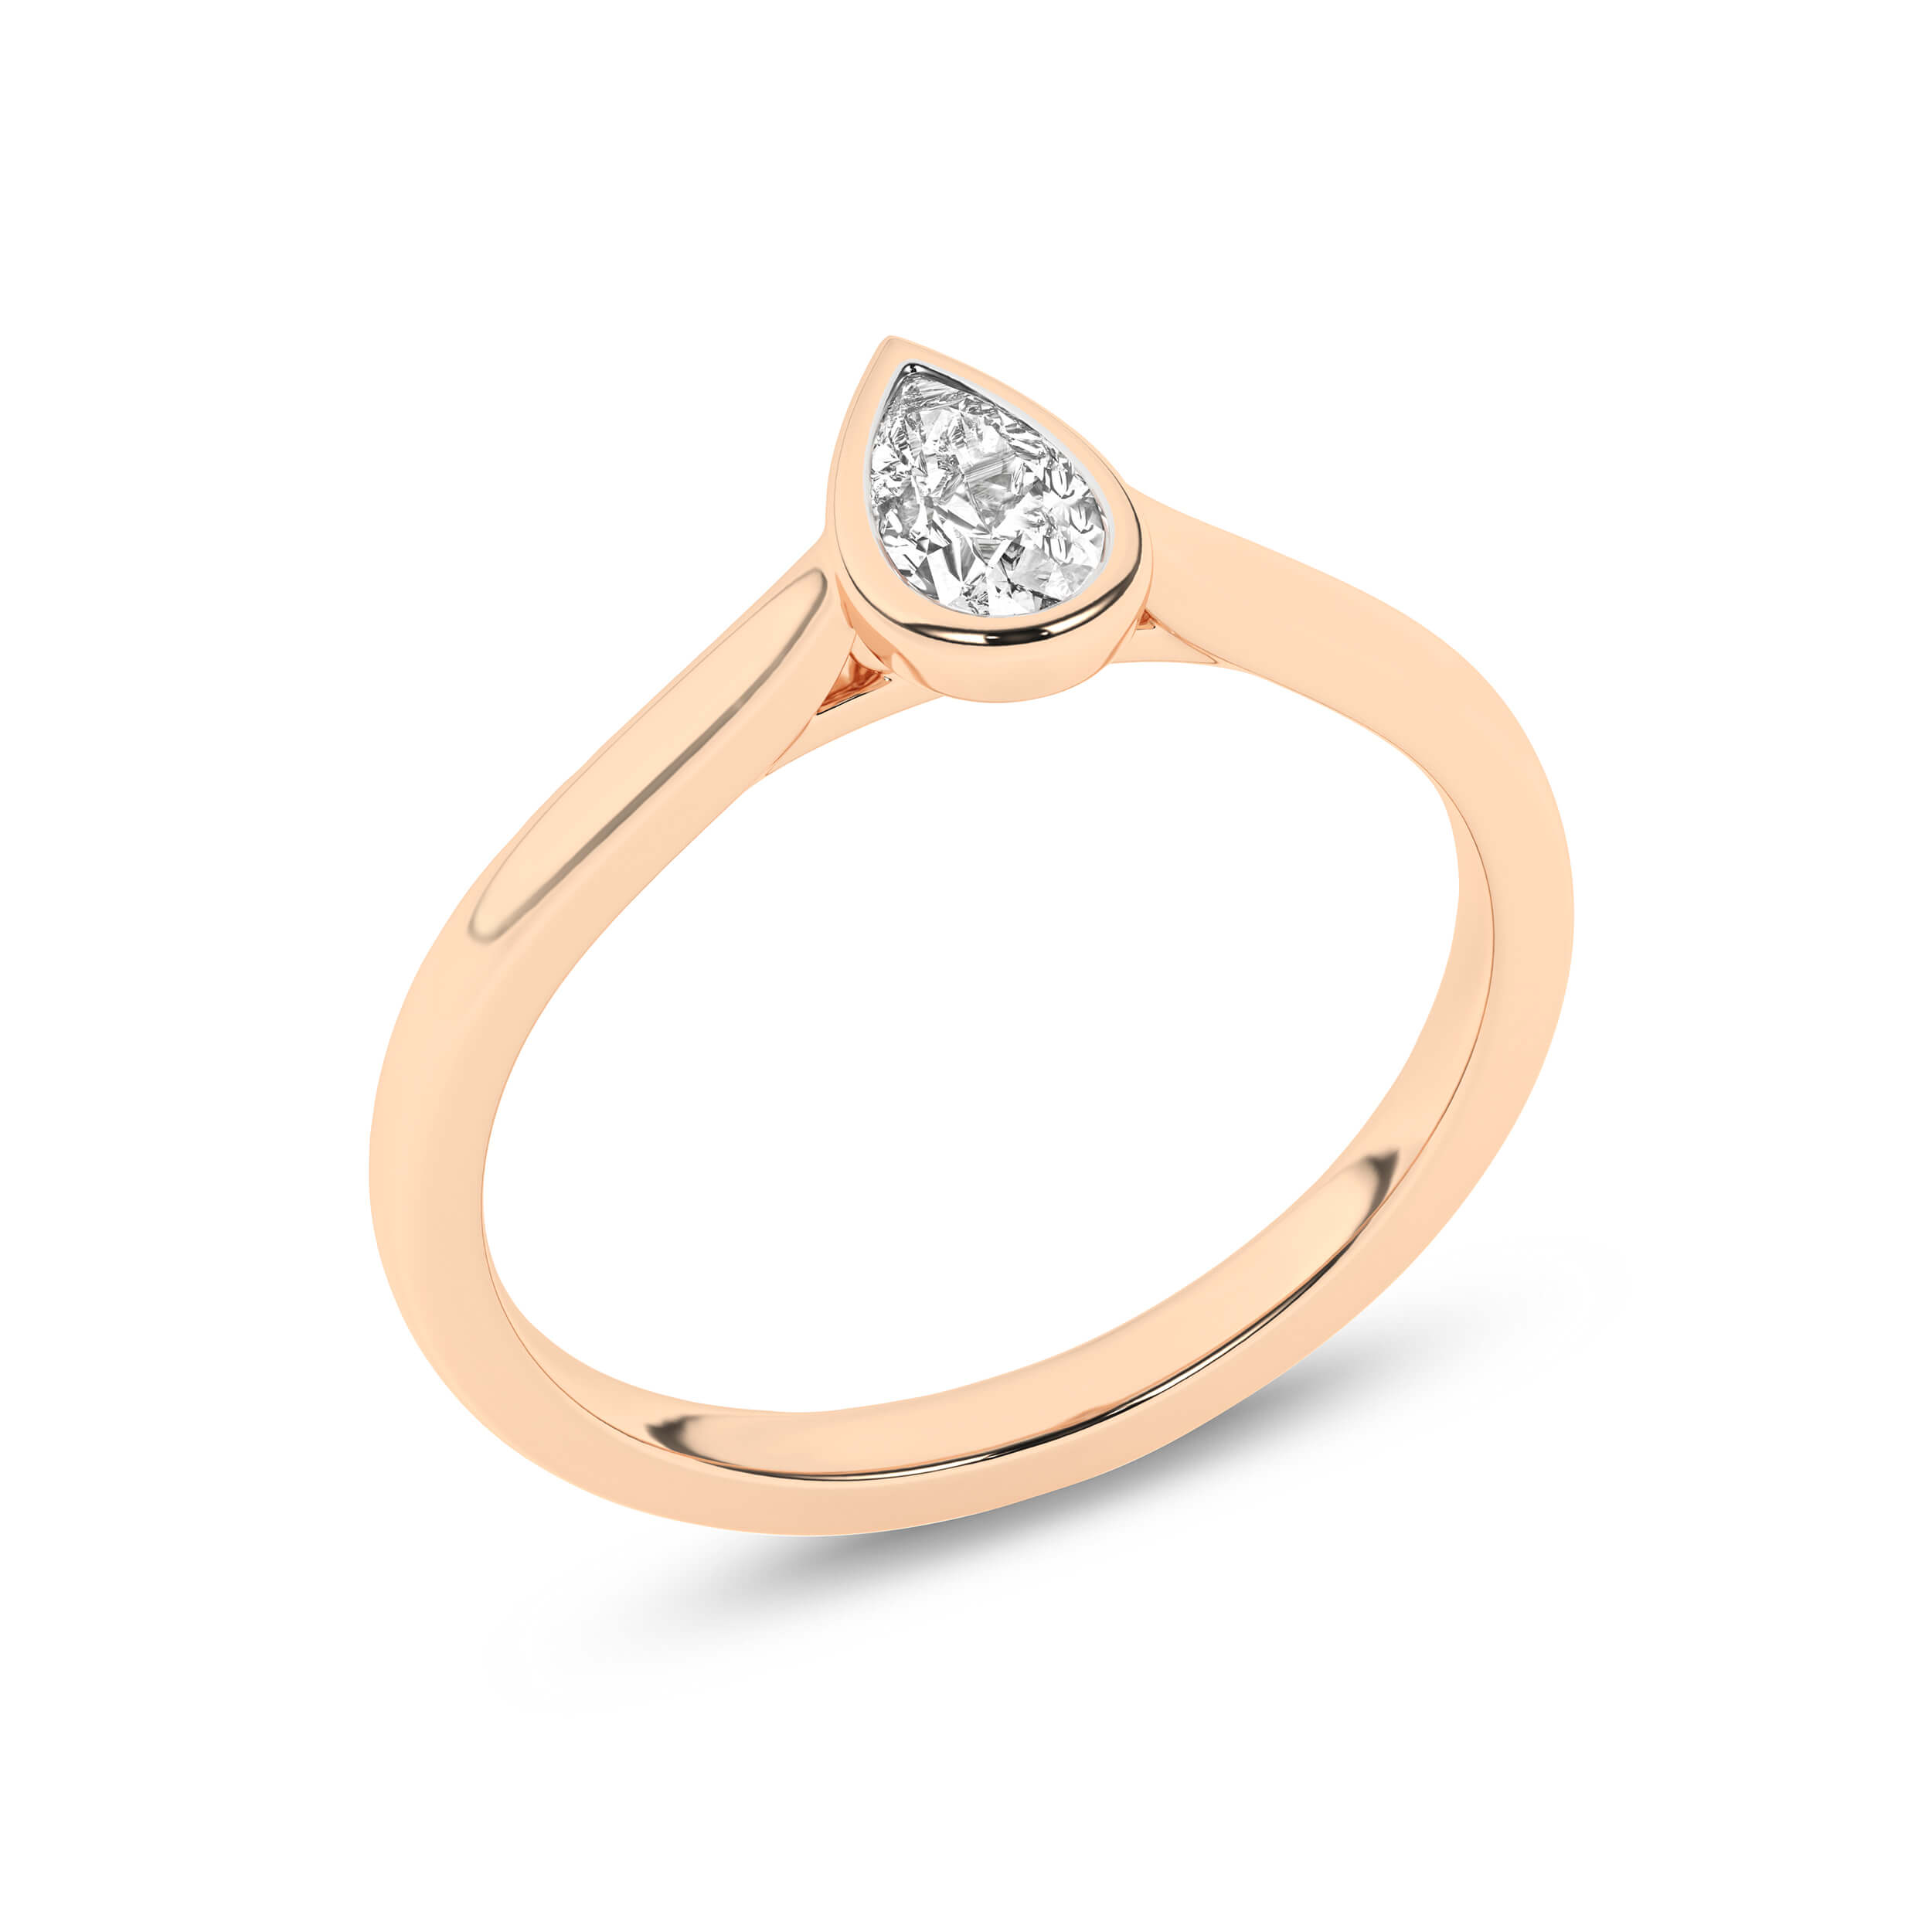 Inel de logodna din Aur Roz 14K cu Diamant 0.33Ct, articol RS0577, previzualizare foto 4